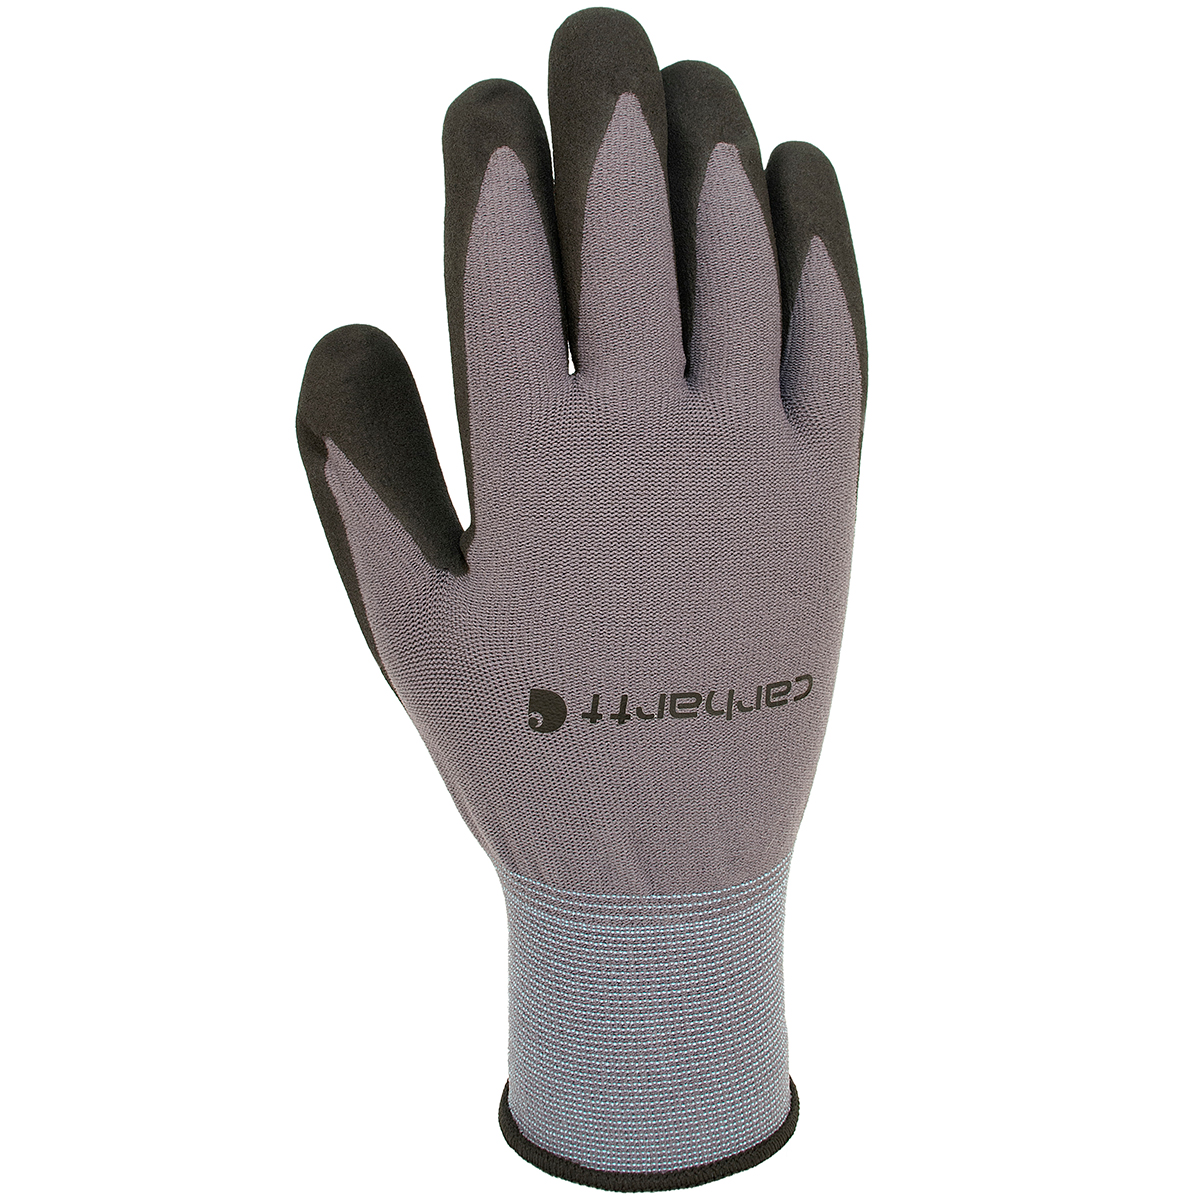 Carhartt Men's Foam Latex Glove